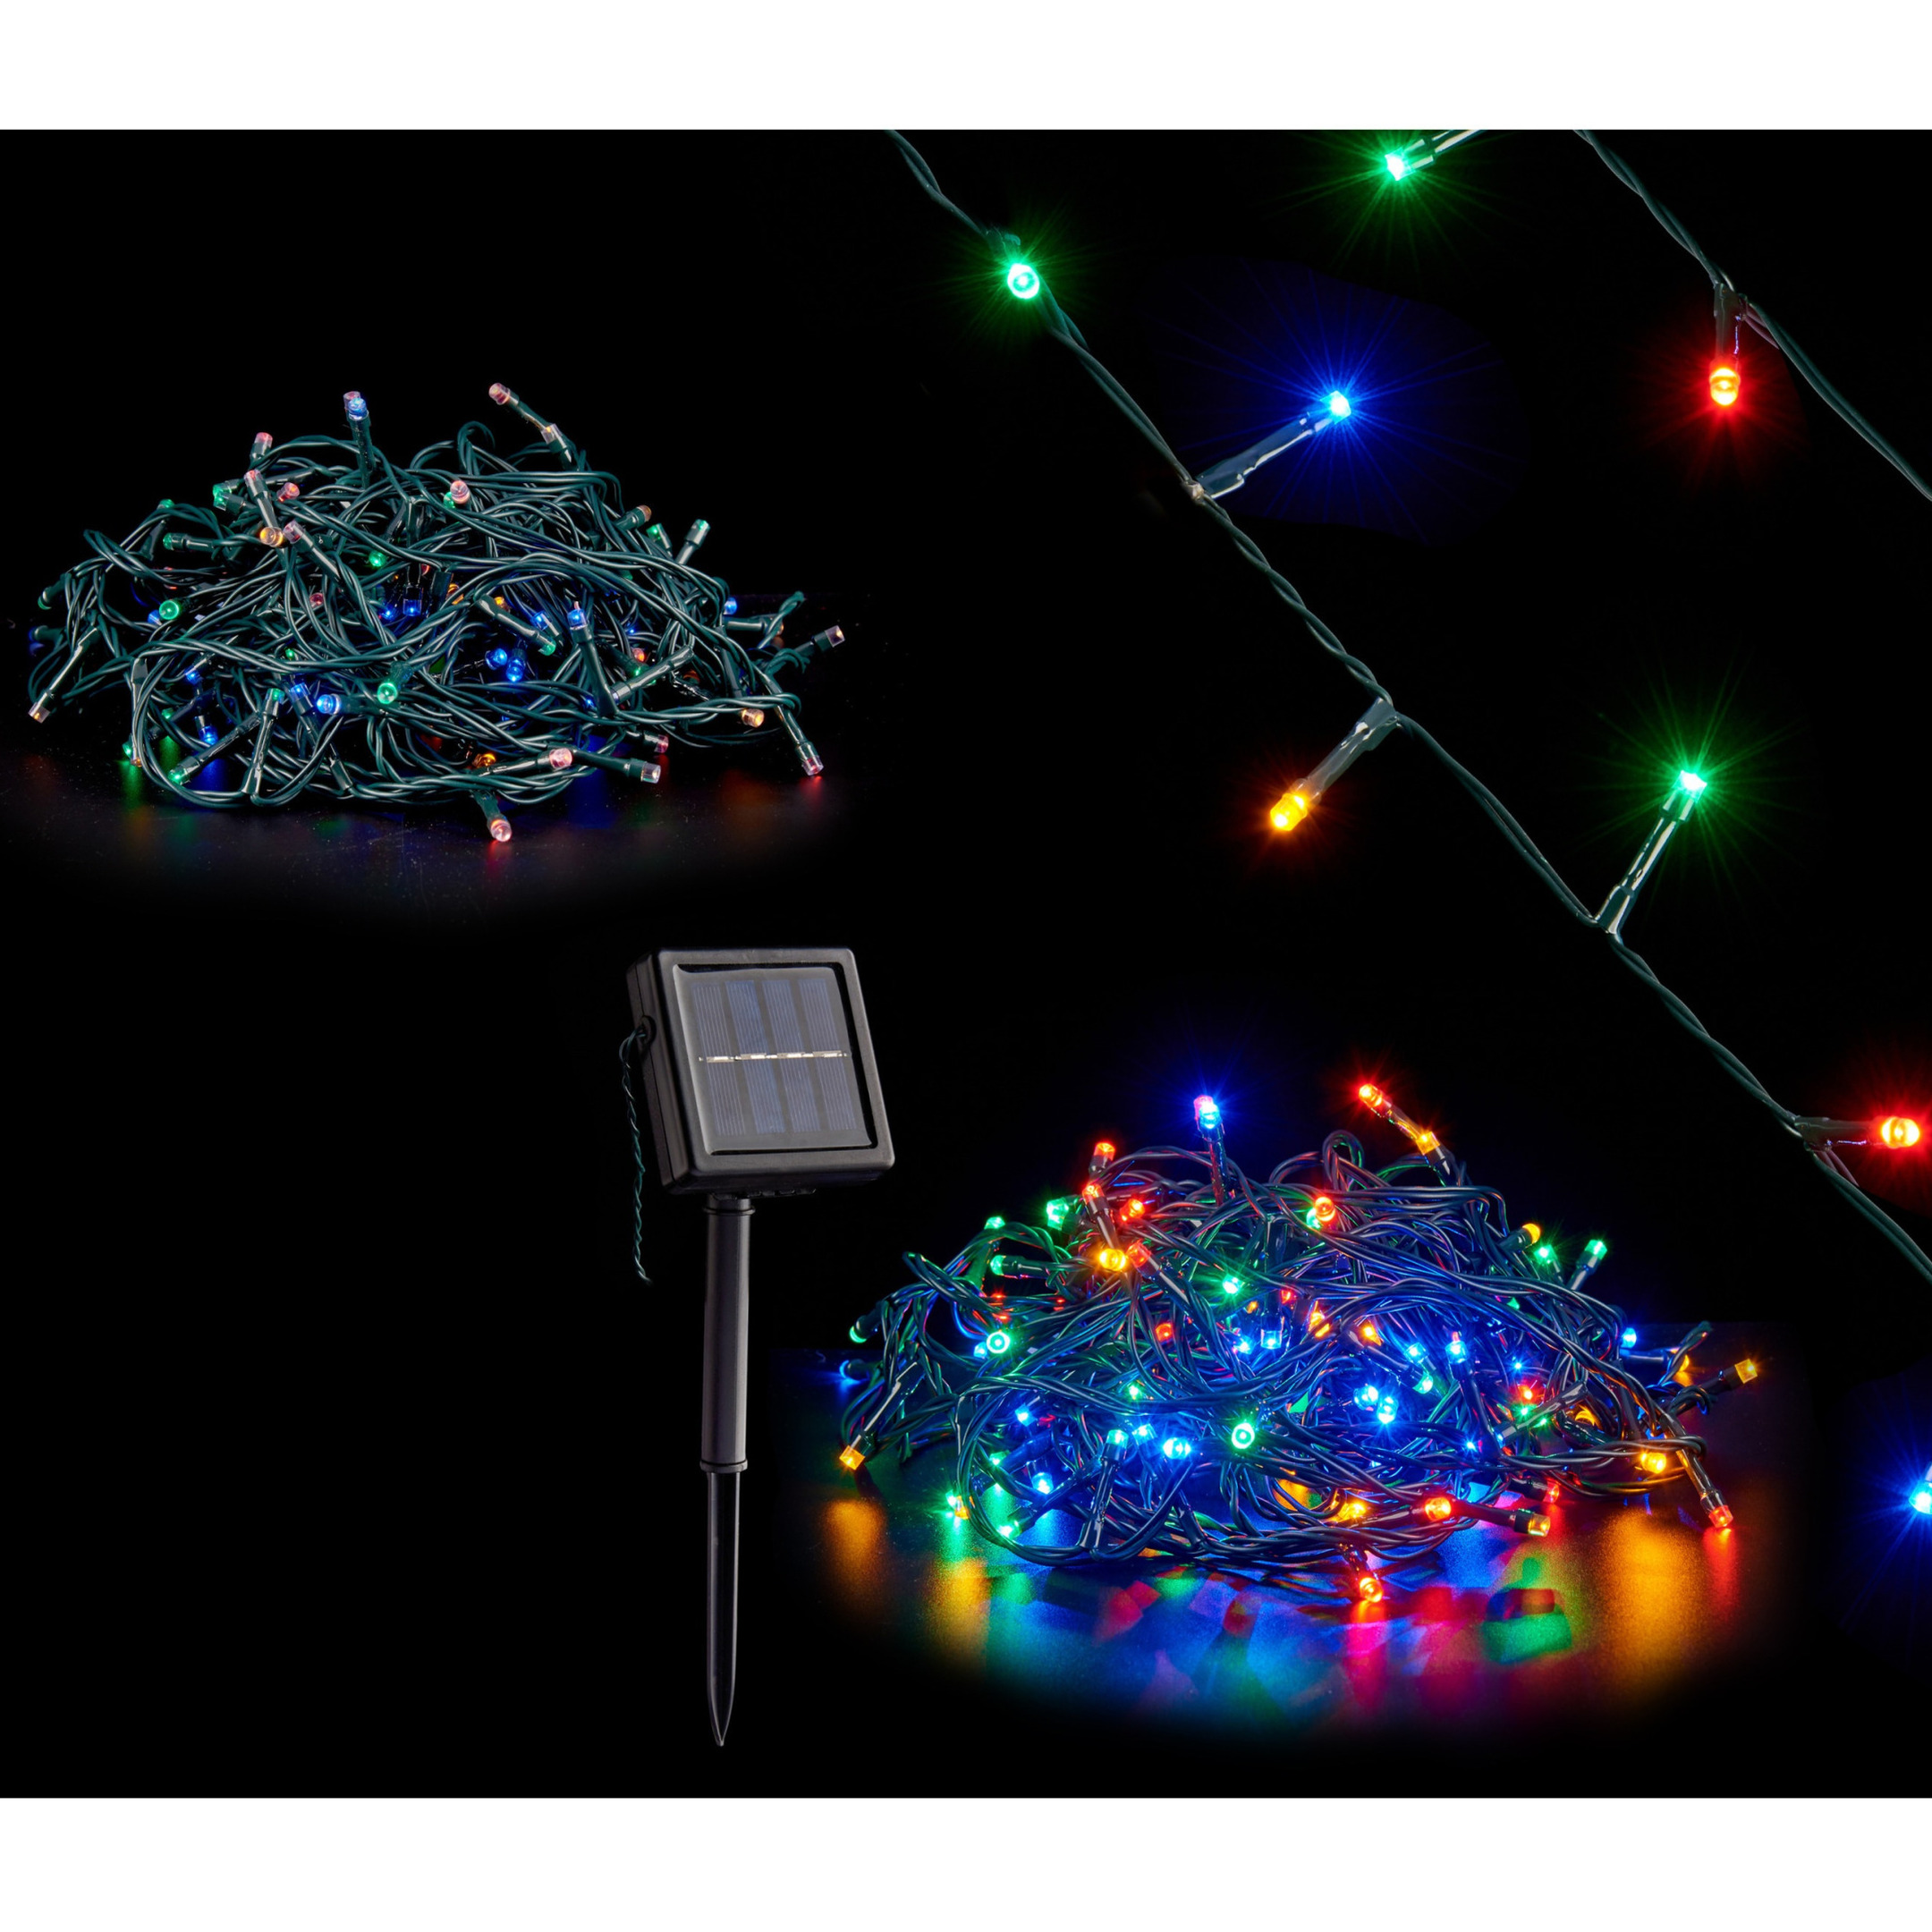 Kerstverlichting/party lights 150 gekleurde LED lampjes op zonne-energie